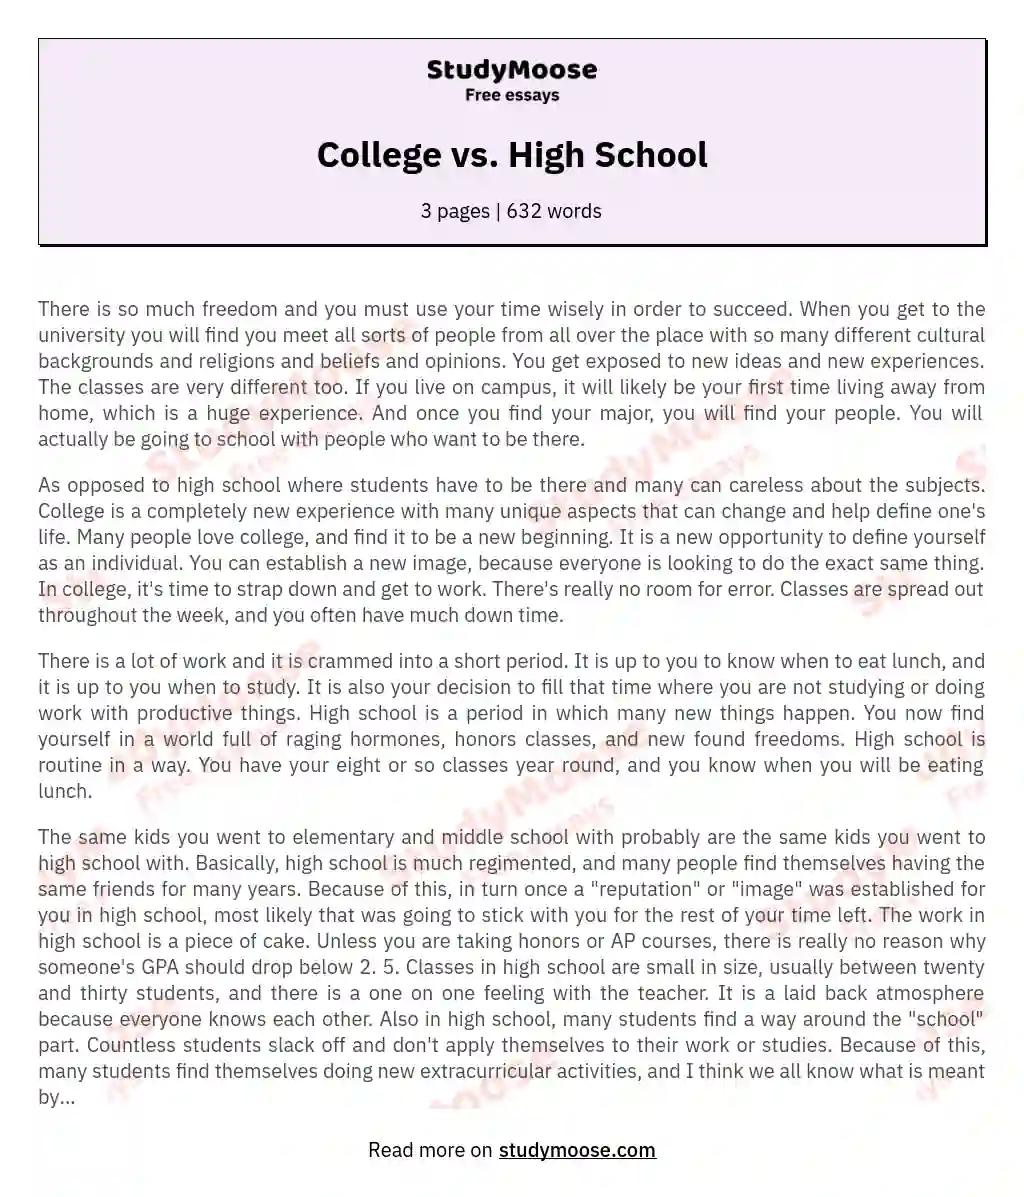 College vs. High School essay